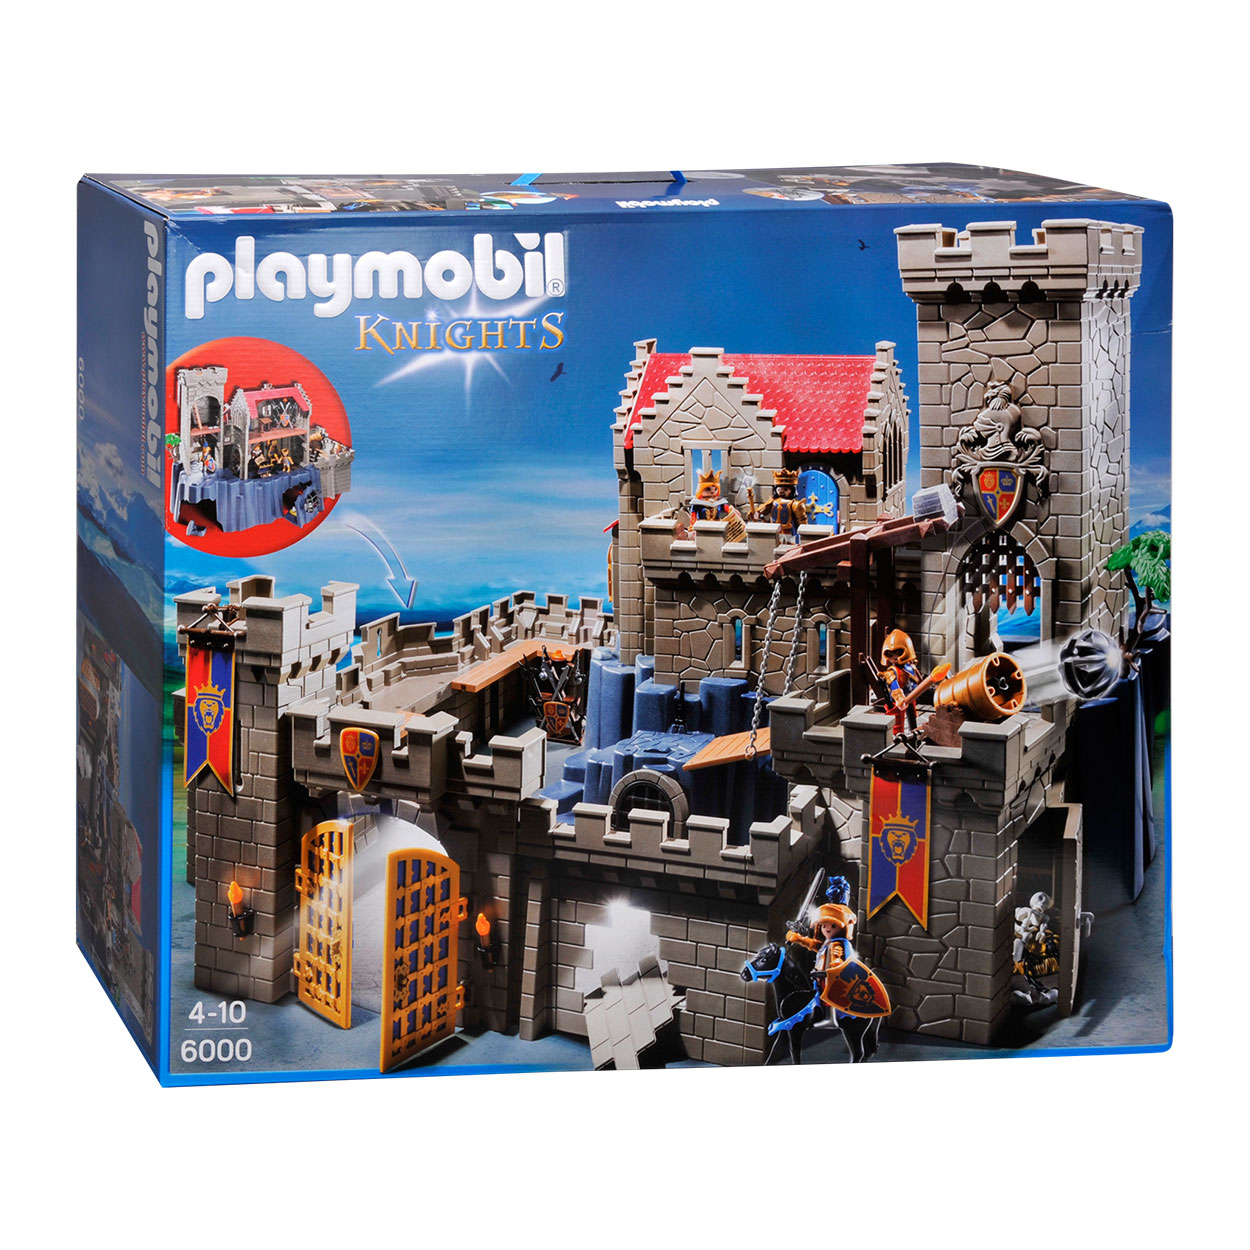 Playmobil 6000 Lion Knights | Toys